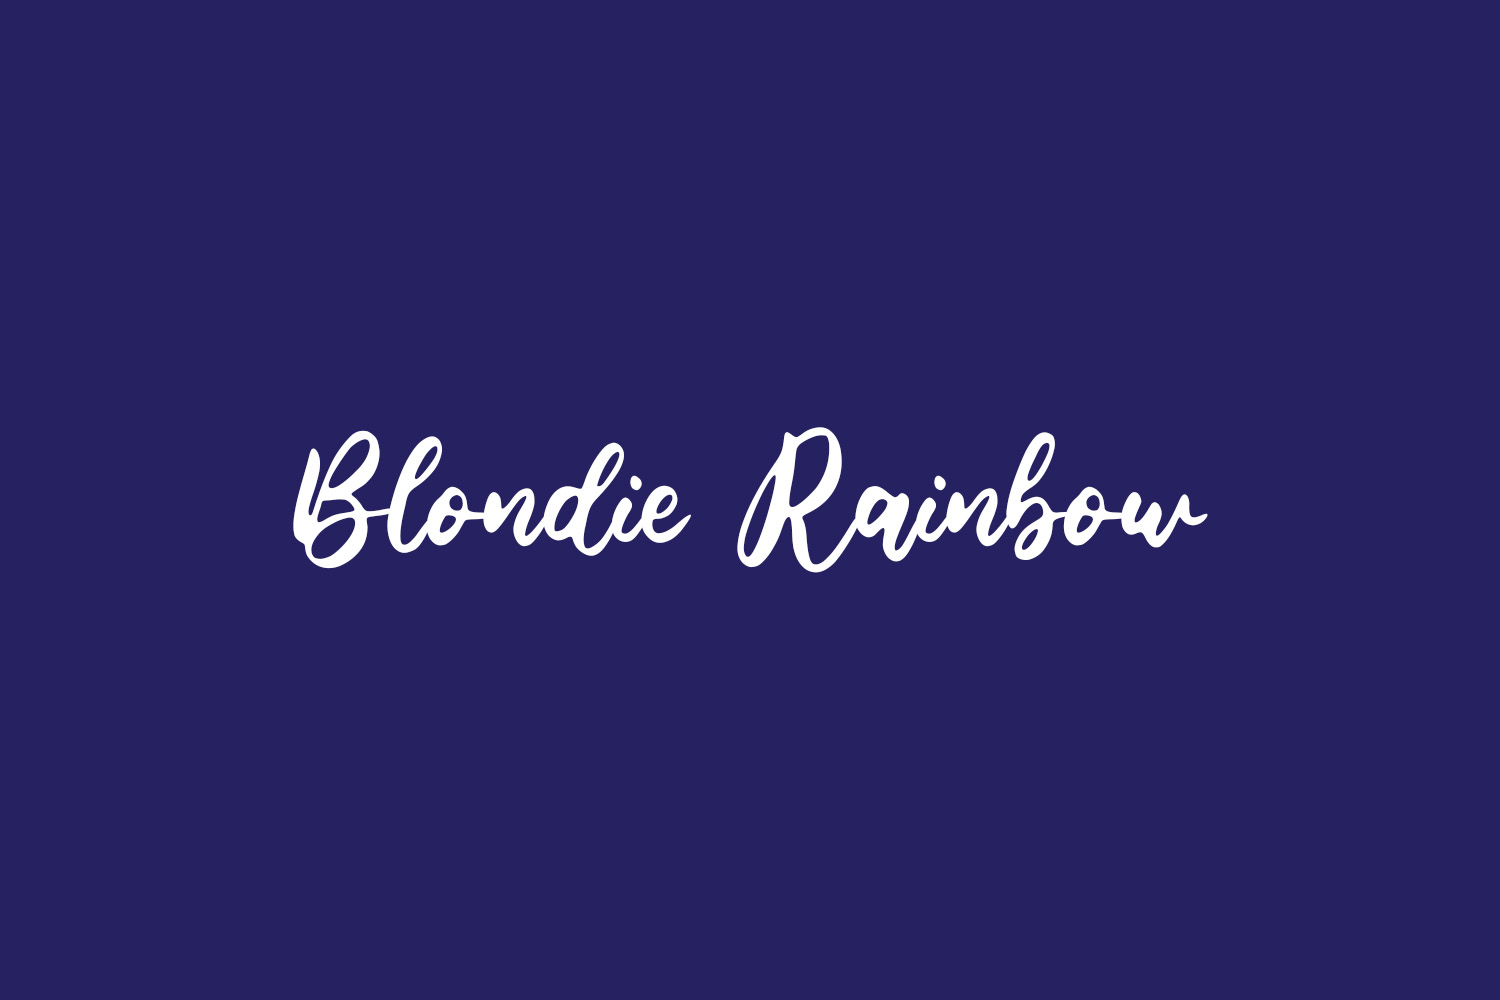 Blondie Rainbow Free Font